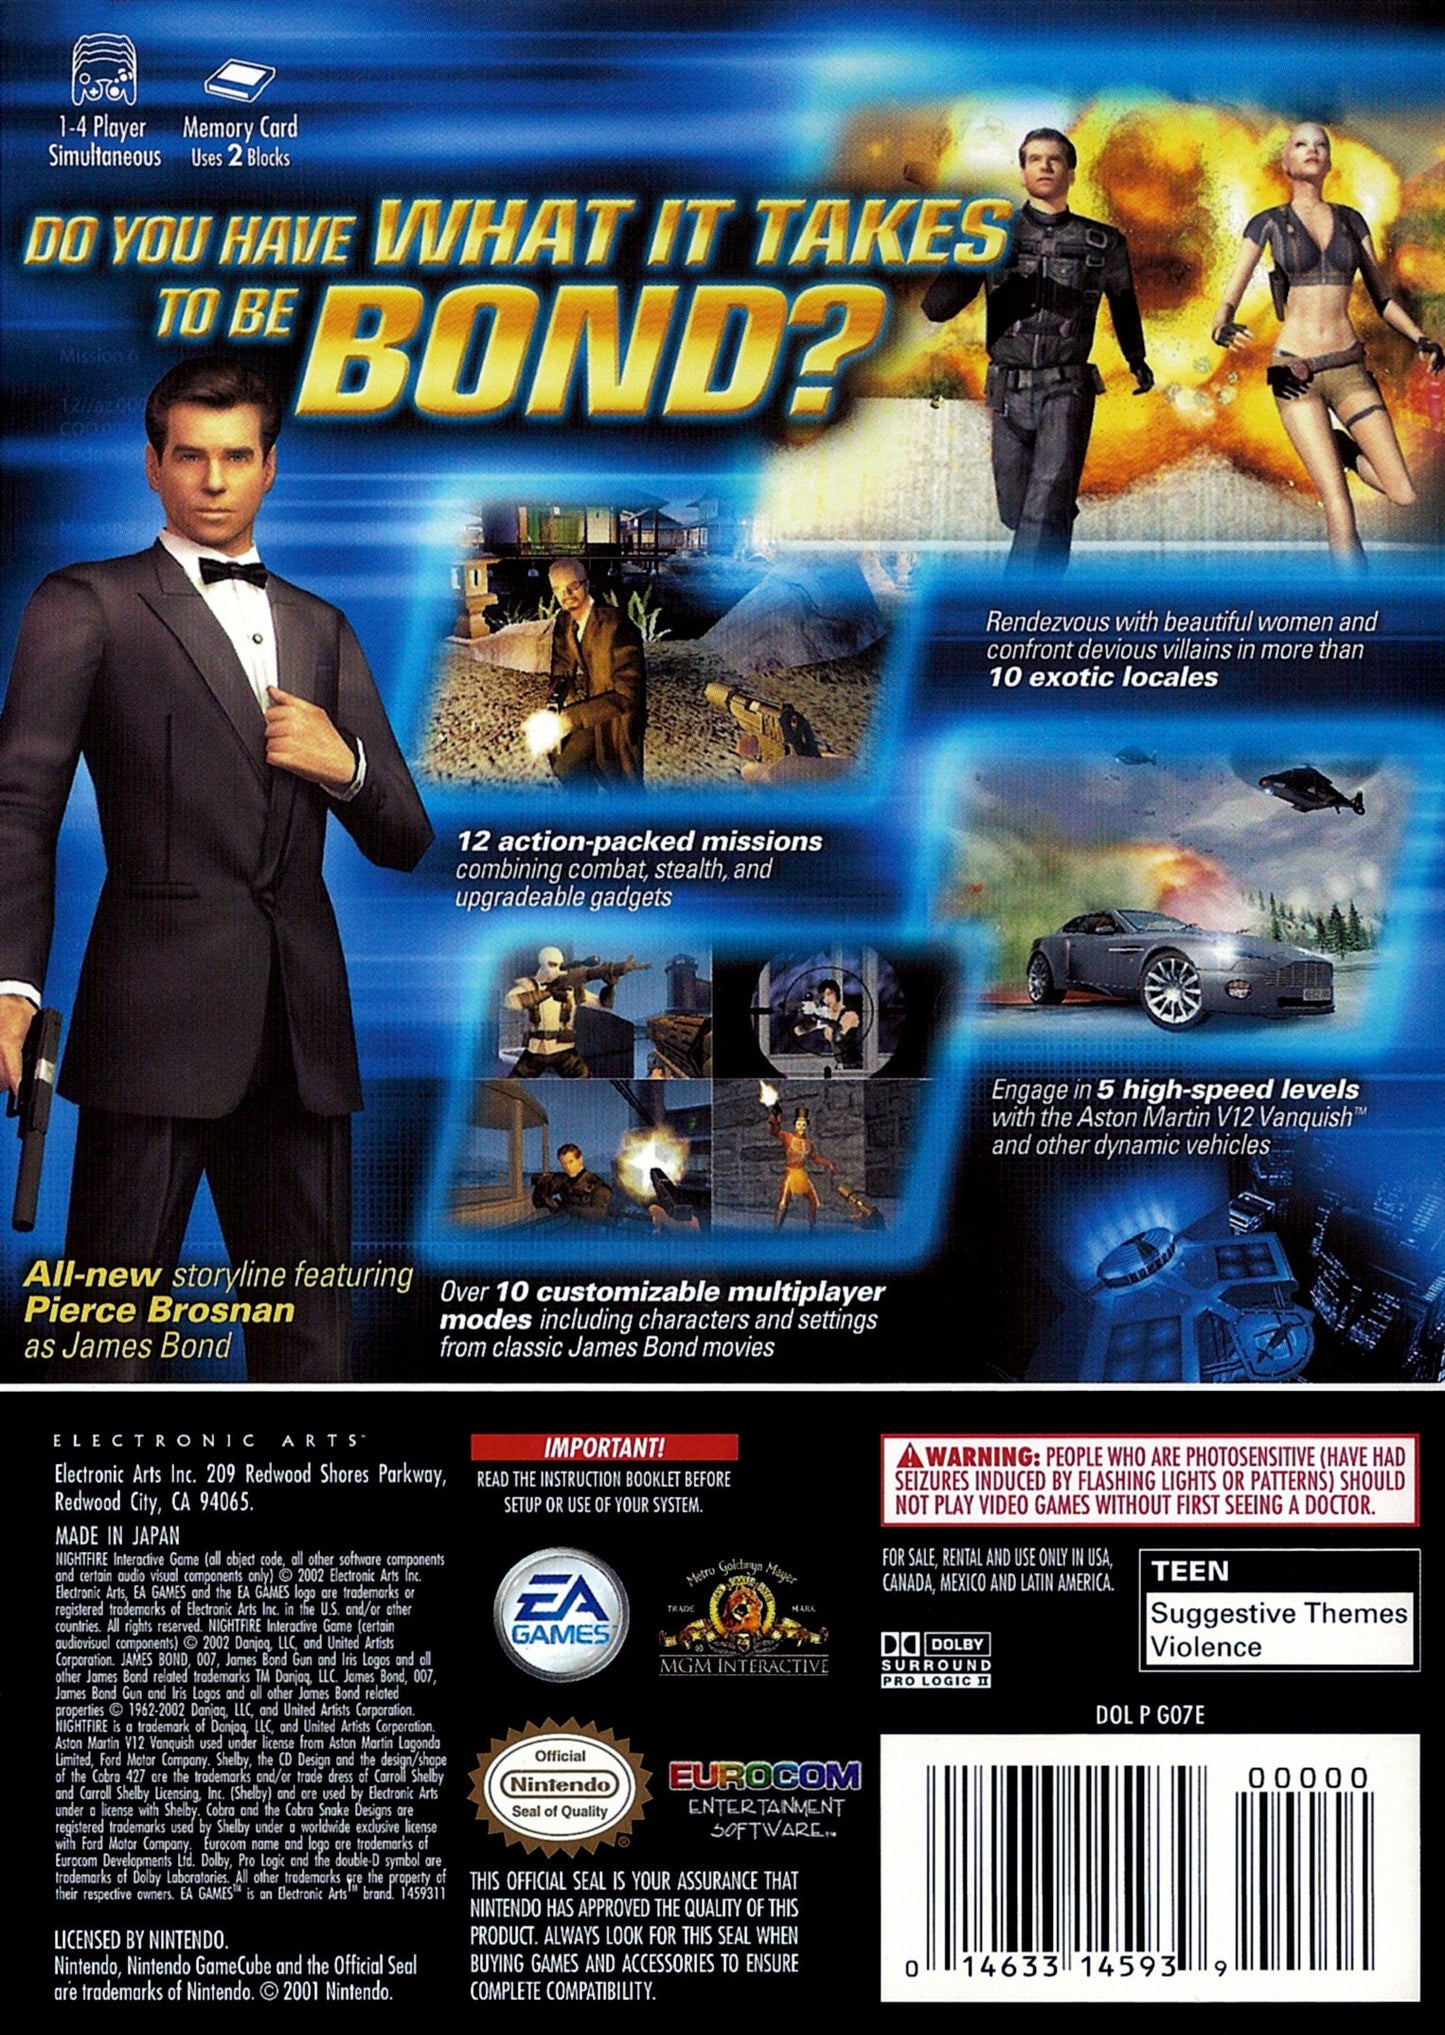 James Bond 007 - NightFire